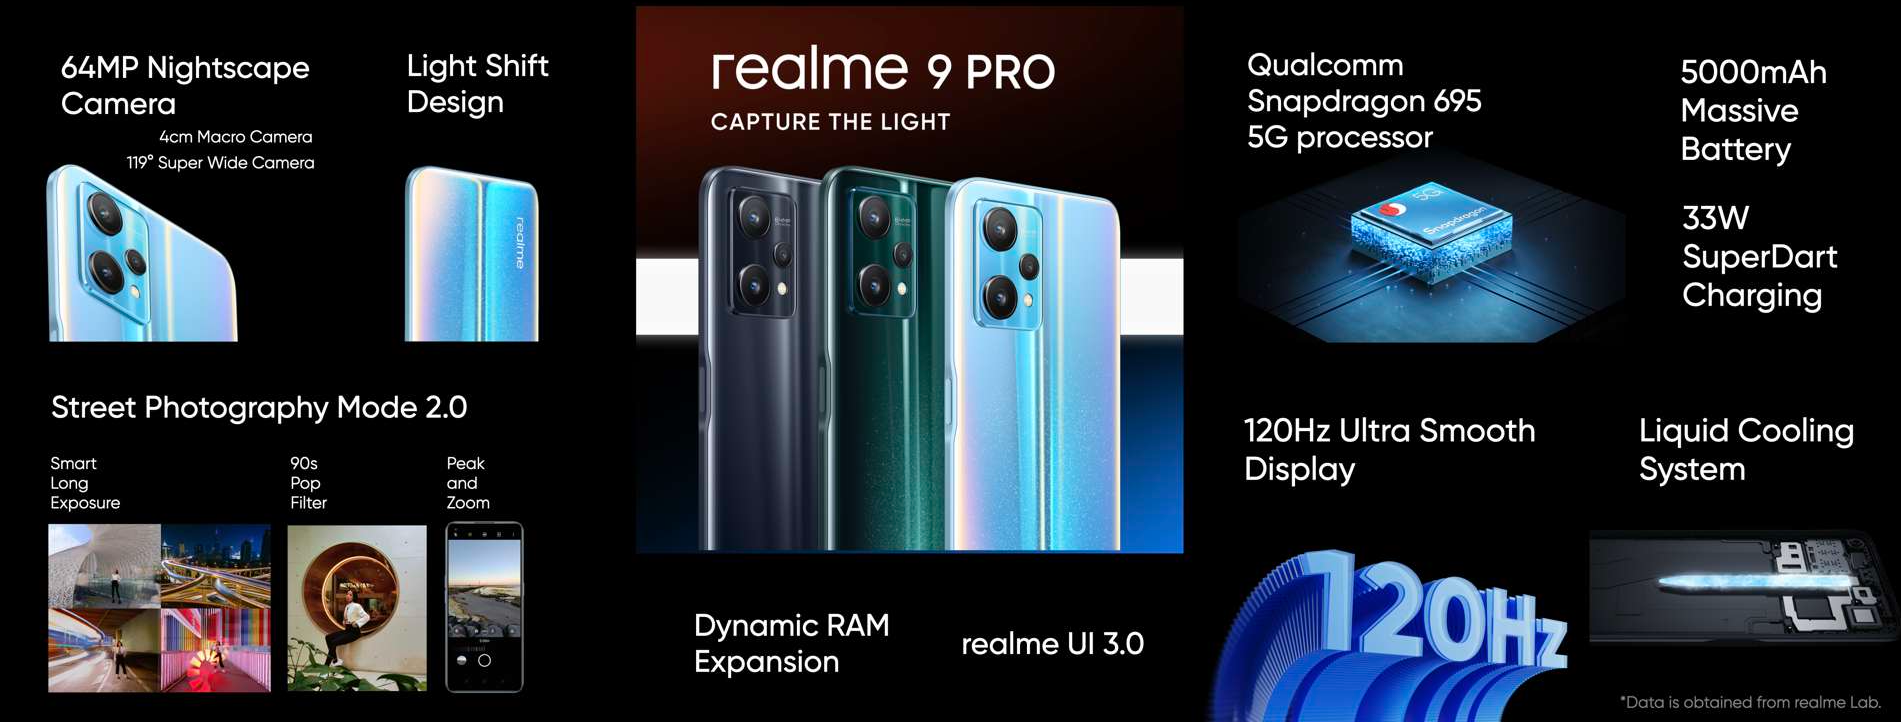 realme 9 Pro Series 5G  Launch Event 